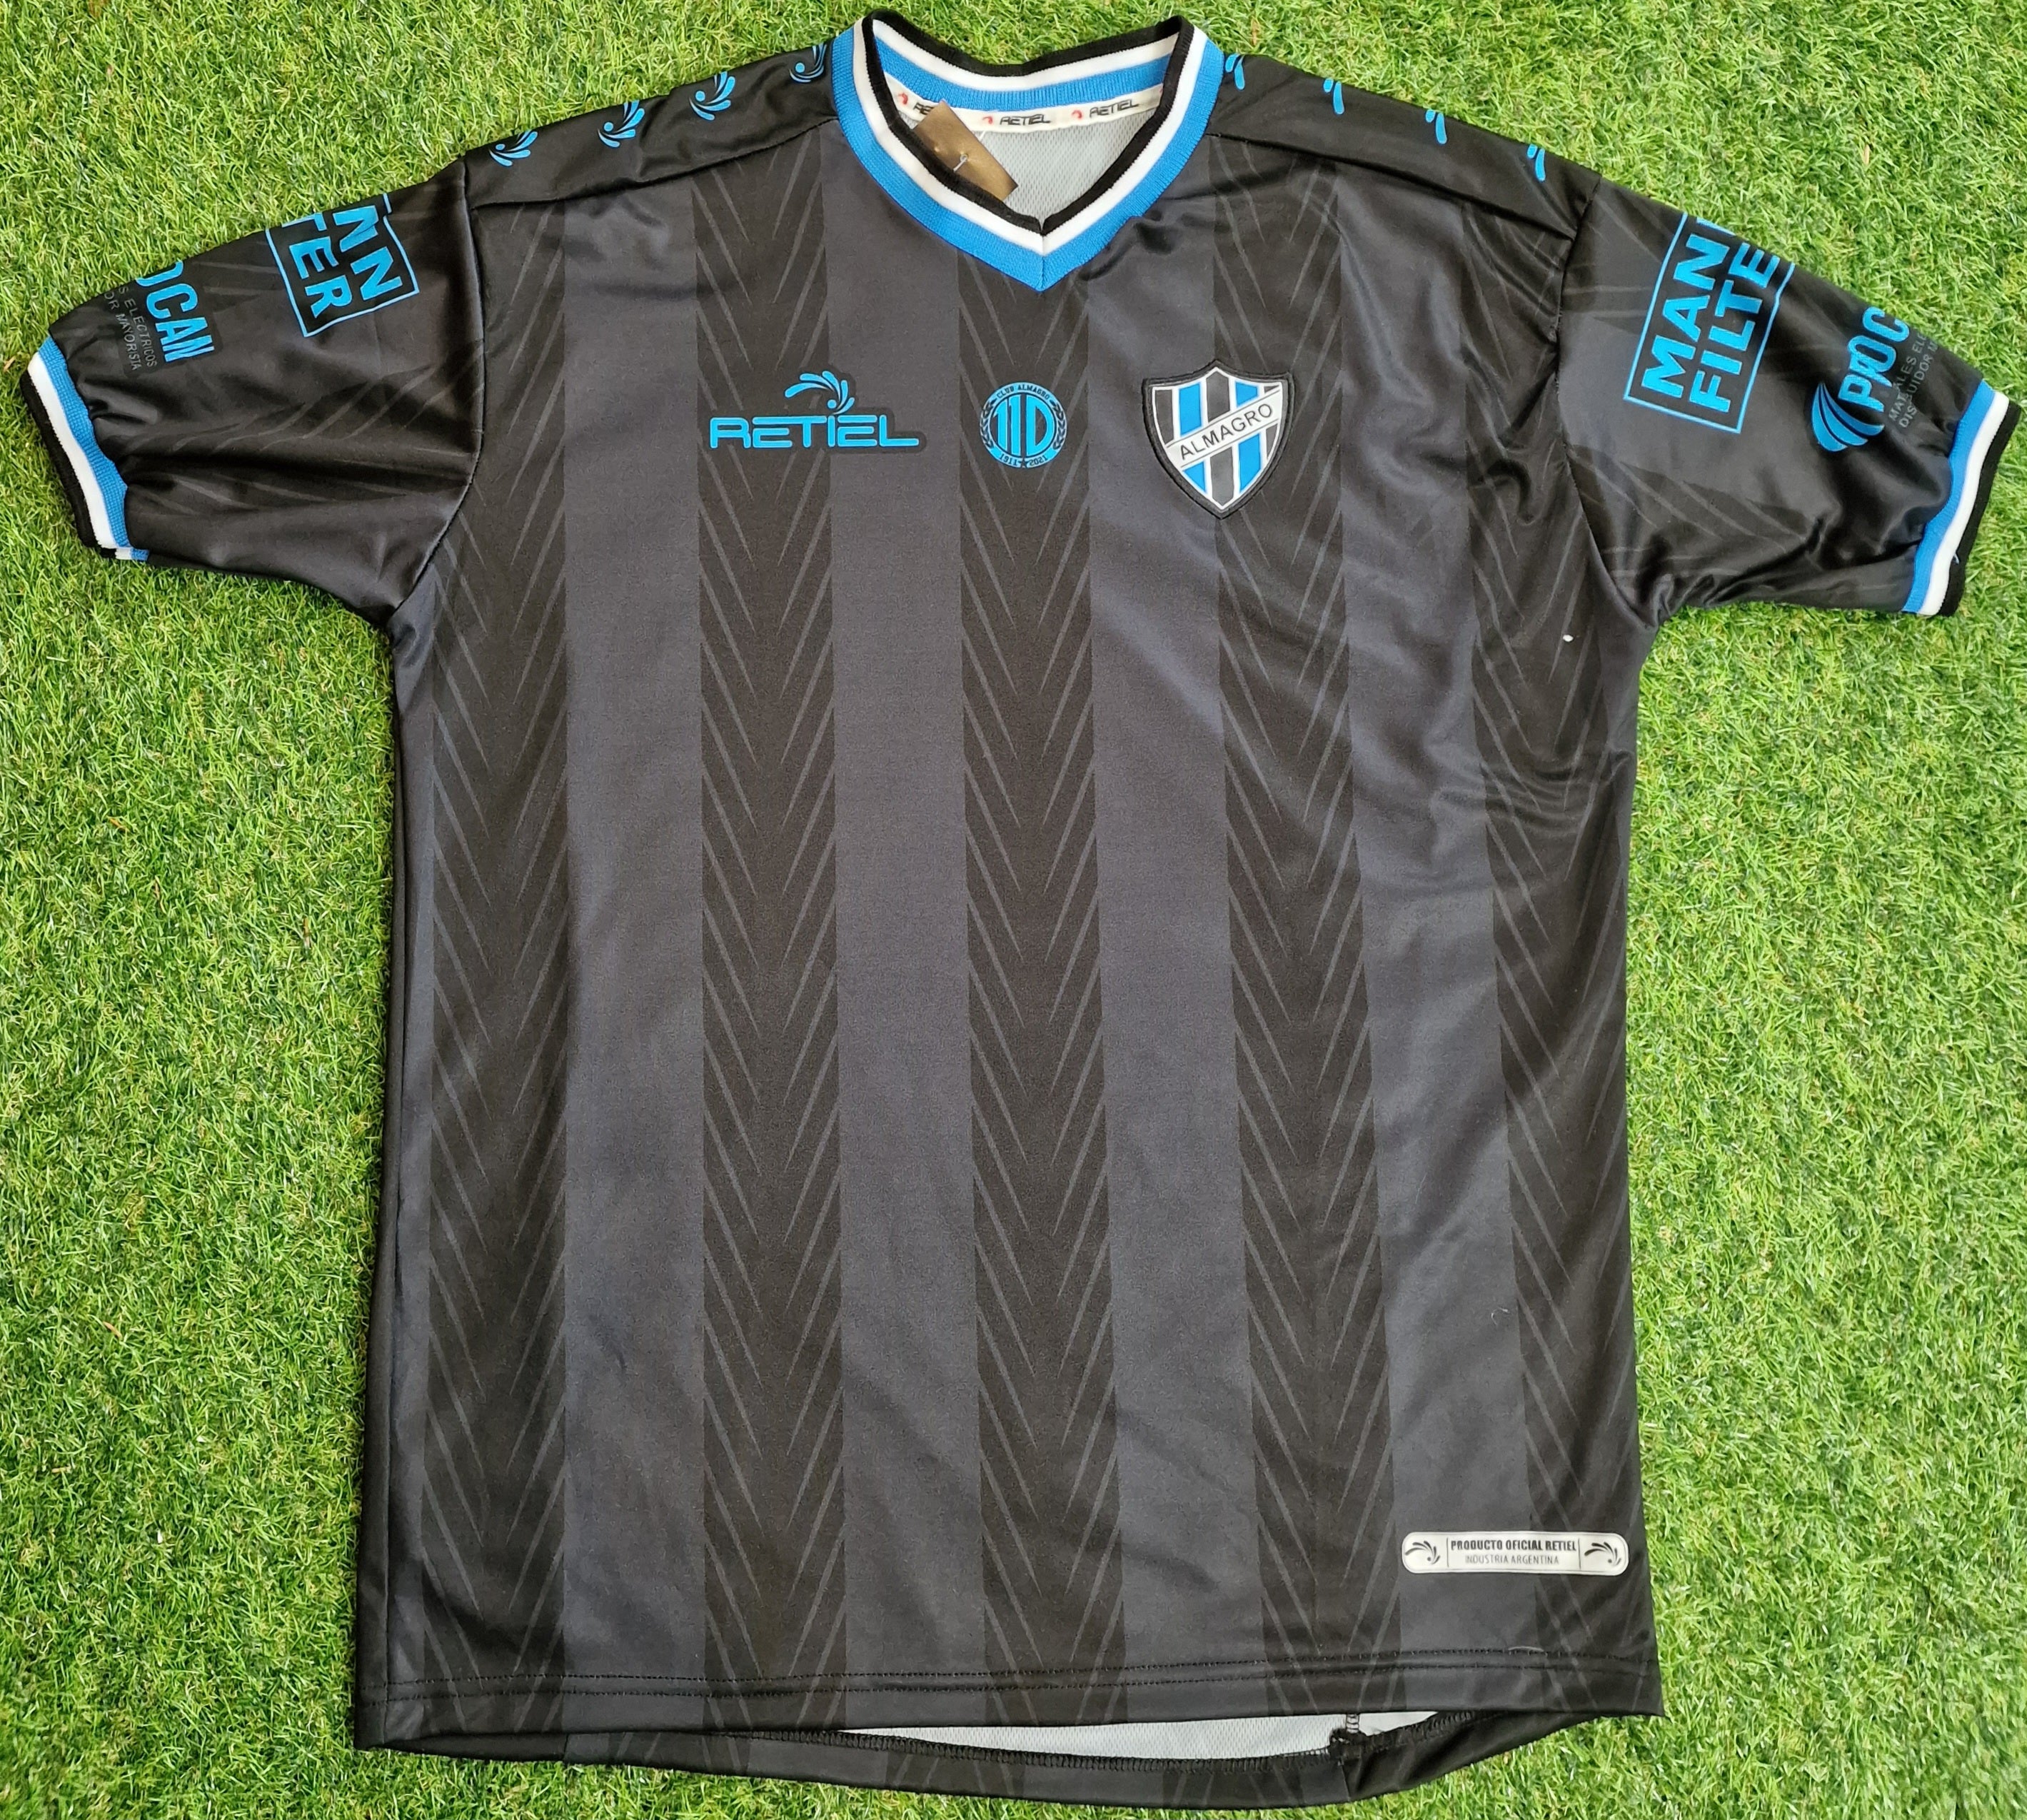 Club Almagro Away Shirt 2021 - Size XL *Defect*